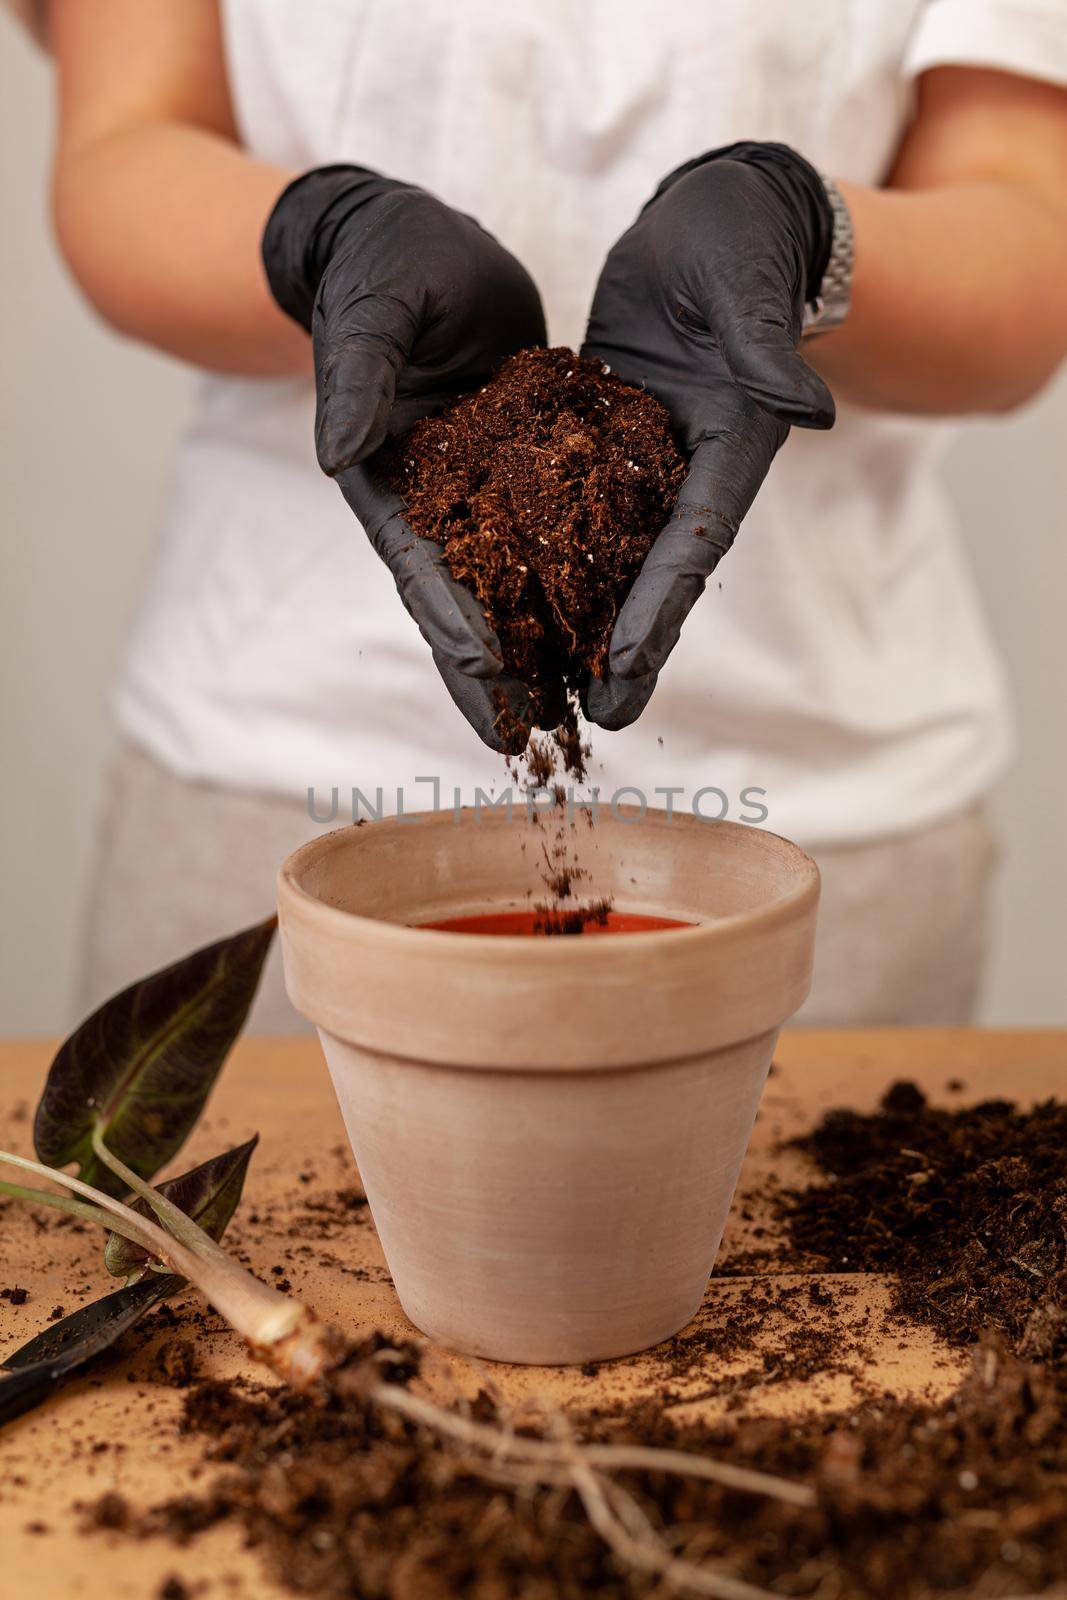 Transplanting a houseplant into a new flower pot. by igor_stramyk